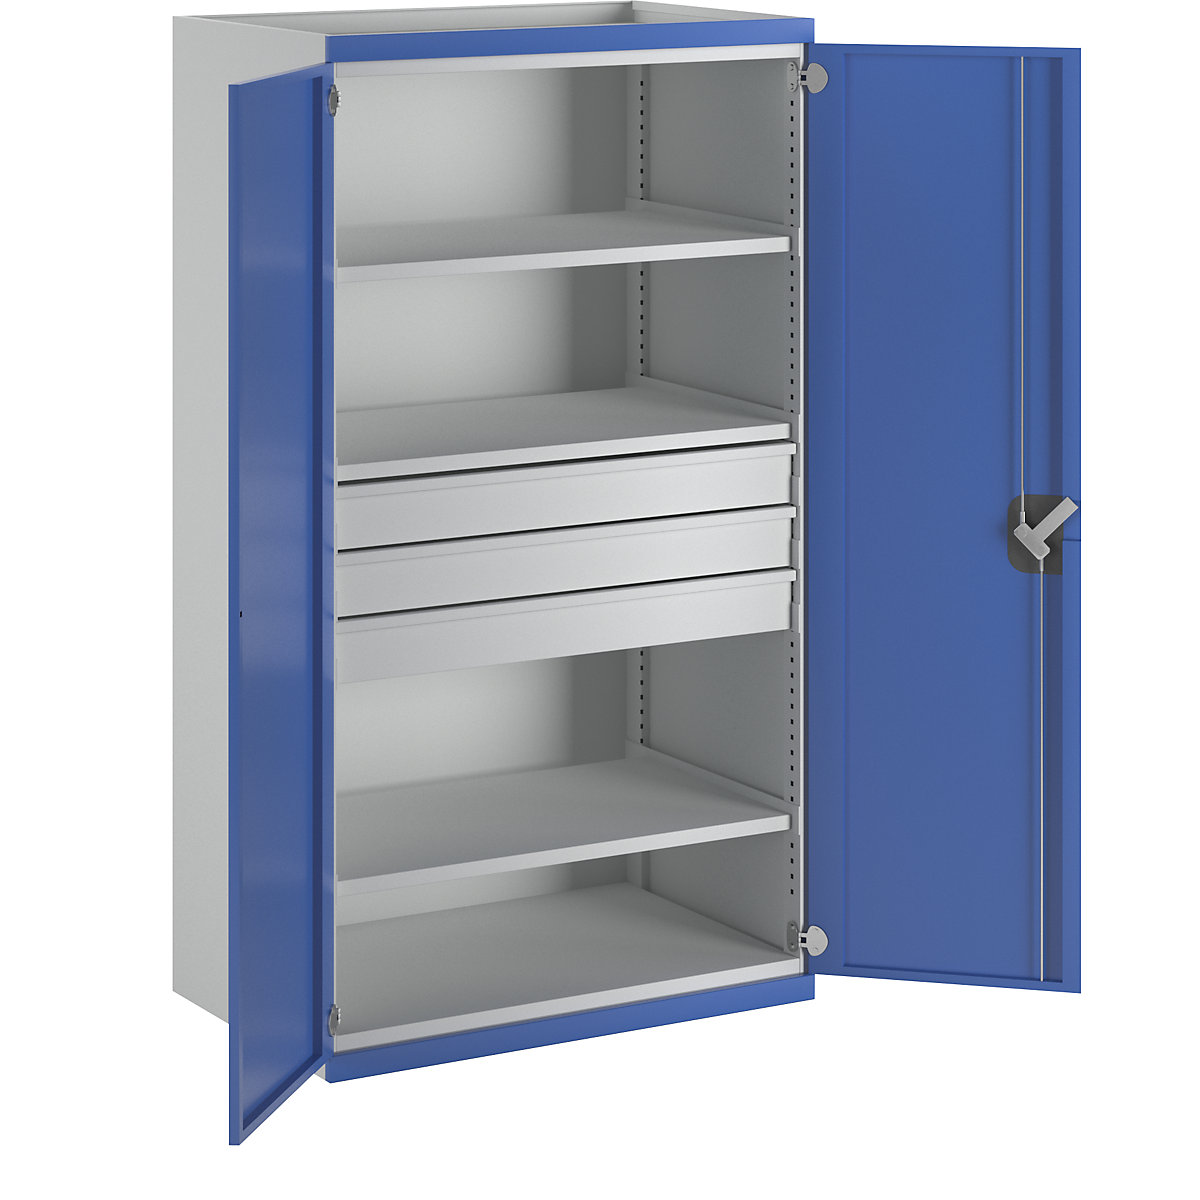 Heavy duty cupboard with 3 shelves - ANKE